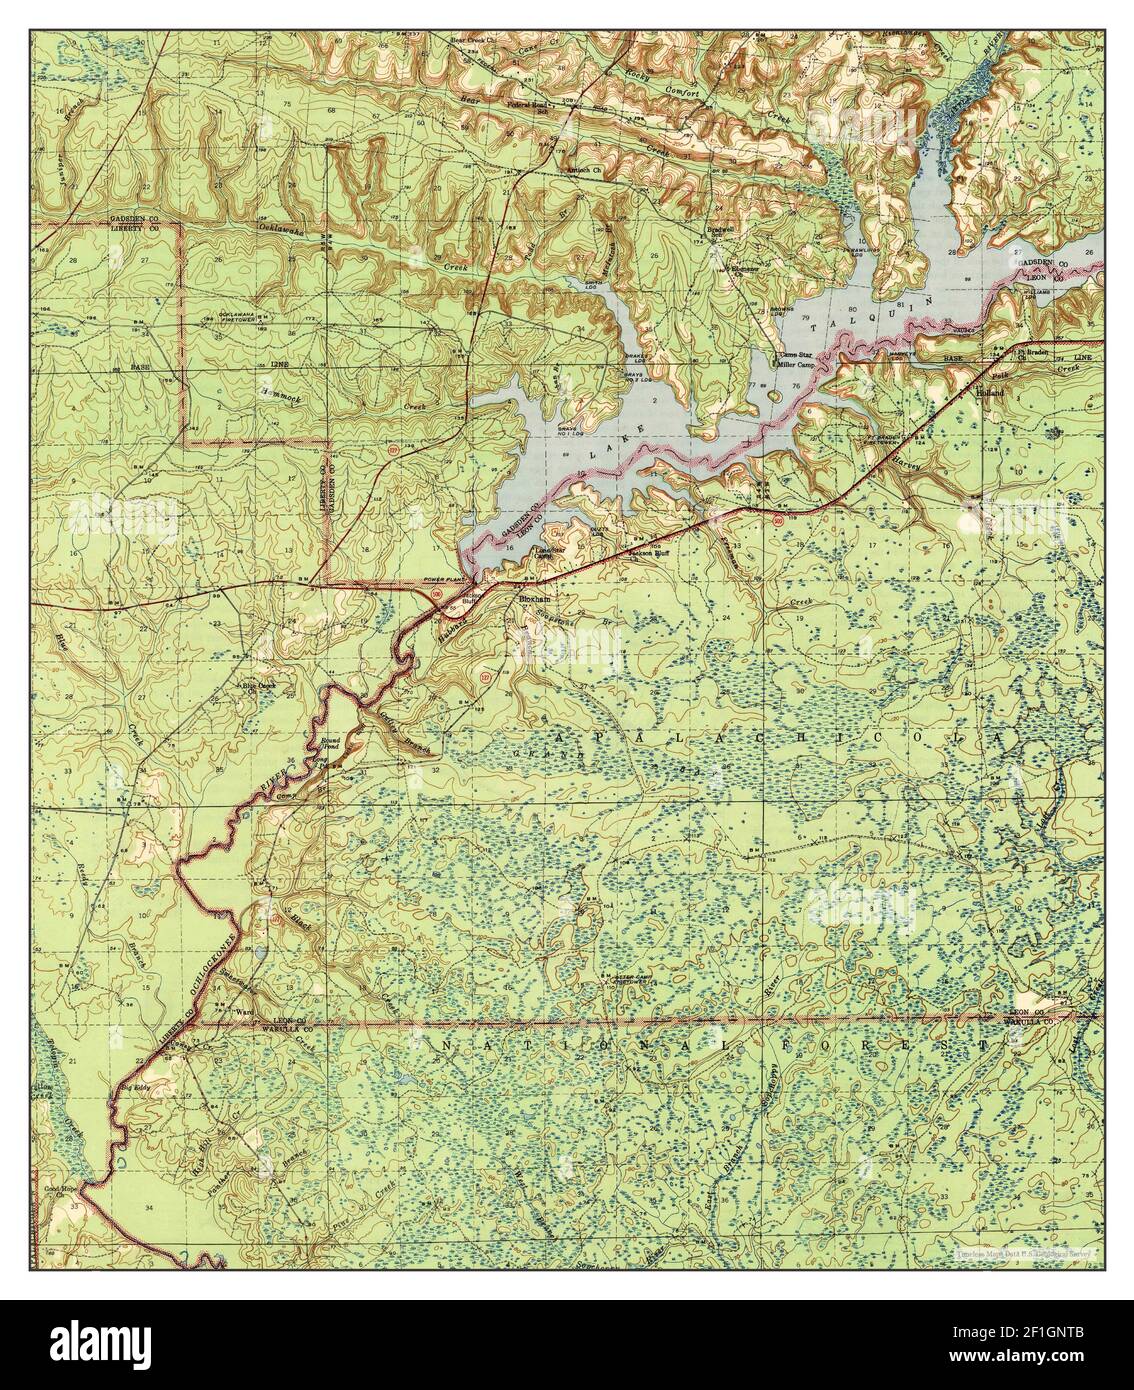 Lake Talquin, Florida, map 1943, 1:62500, United States of America by Timeless Maps, data U.S. Geological Survey Stock Photo